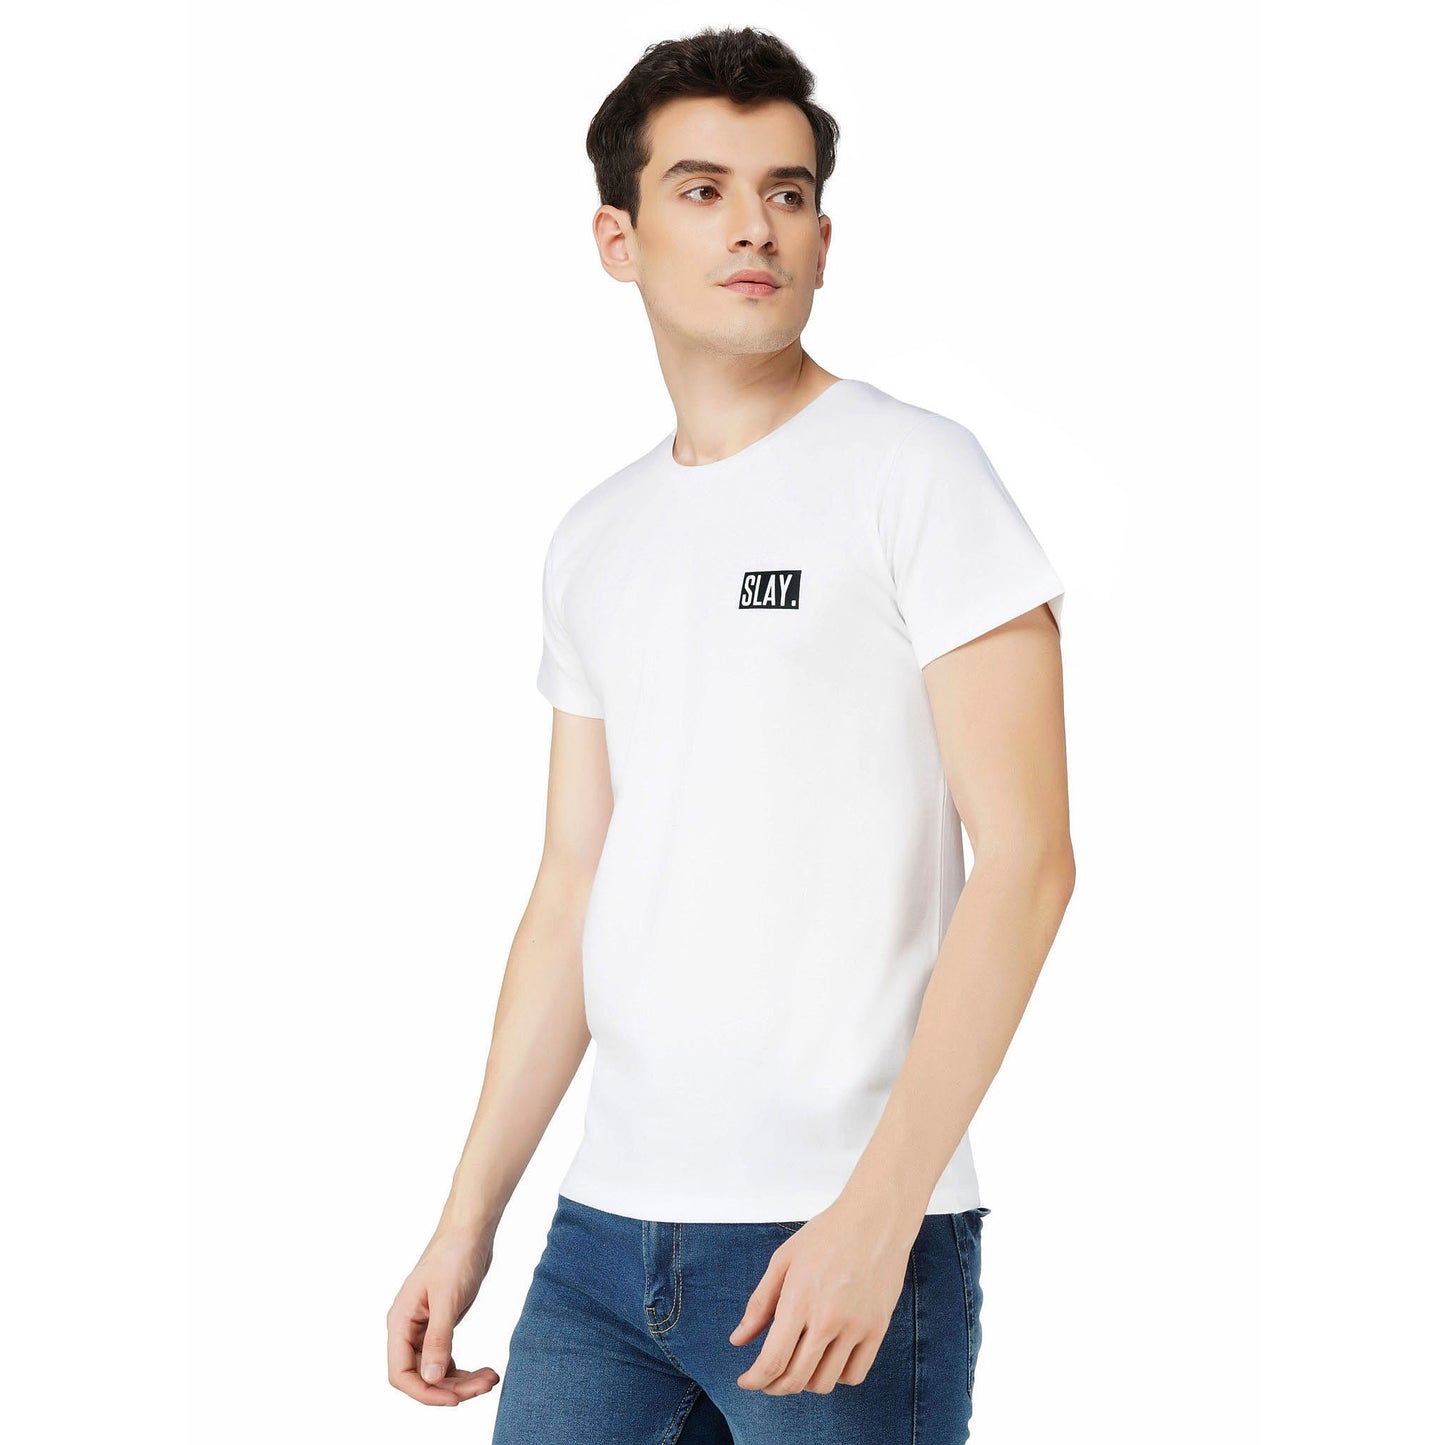 SLAY. Men's Basic Plain White T shirt-clothing-to-slay.myshopify.com-T-Shirt